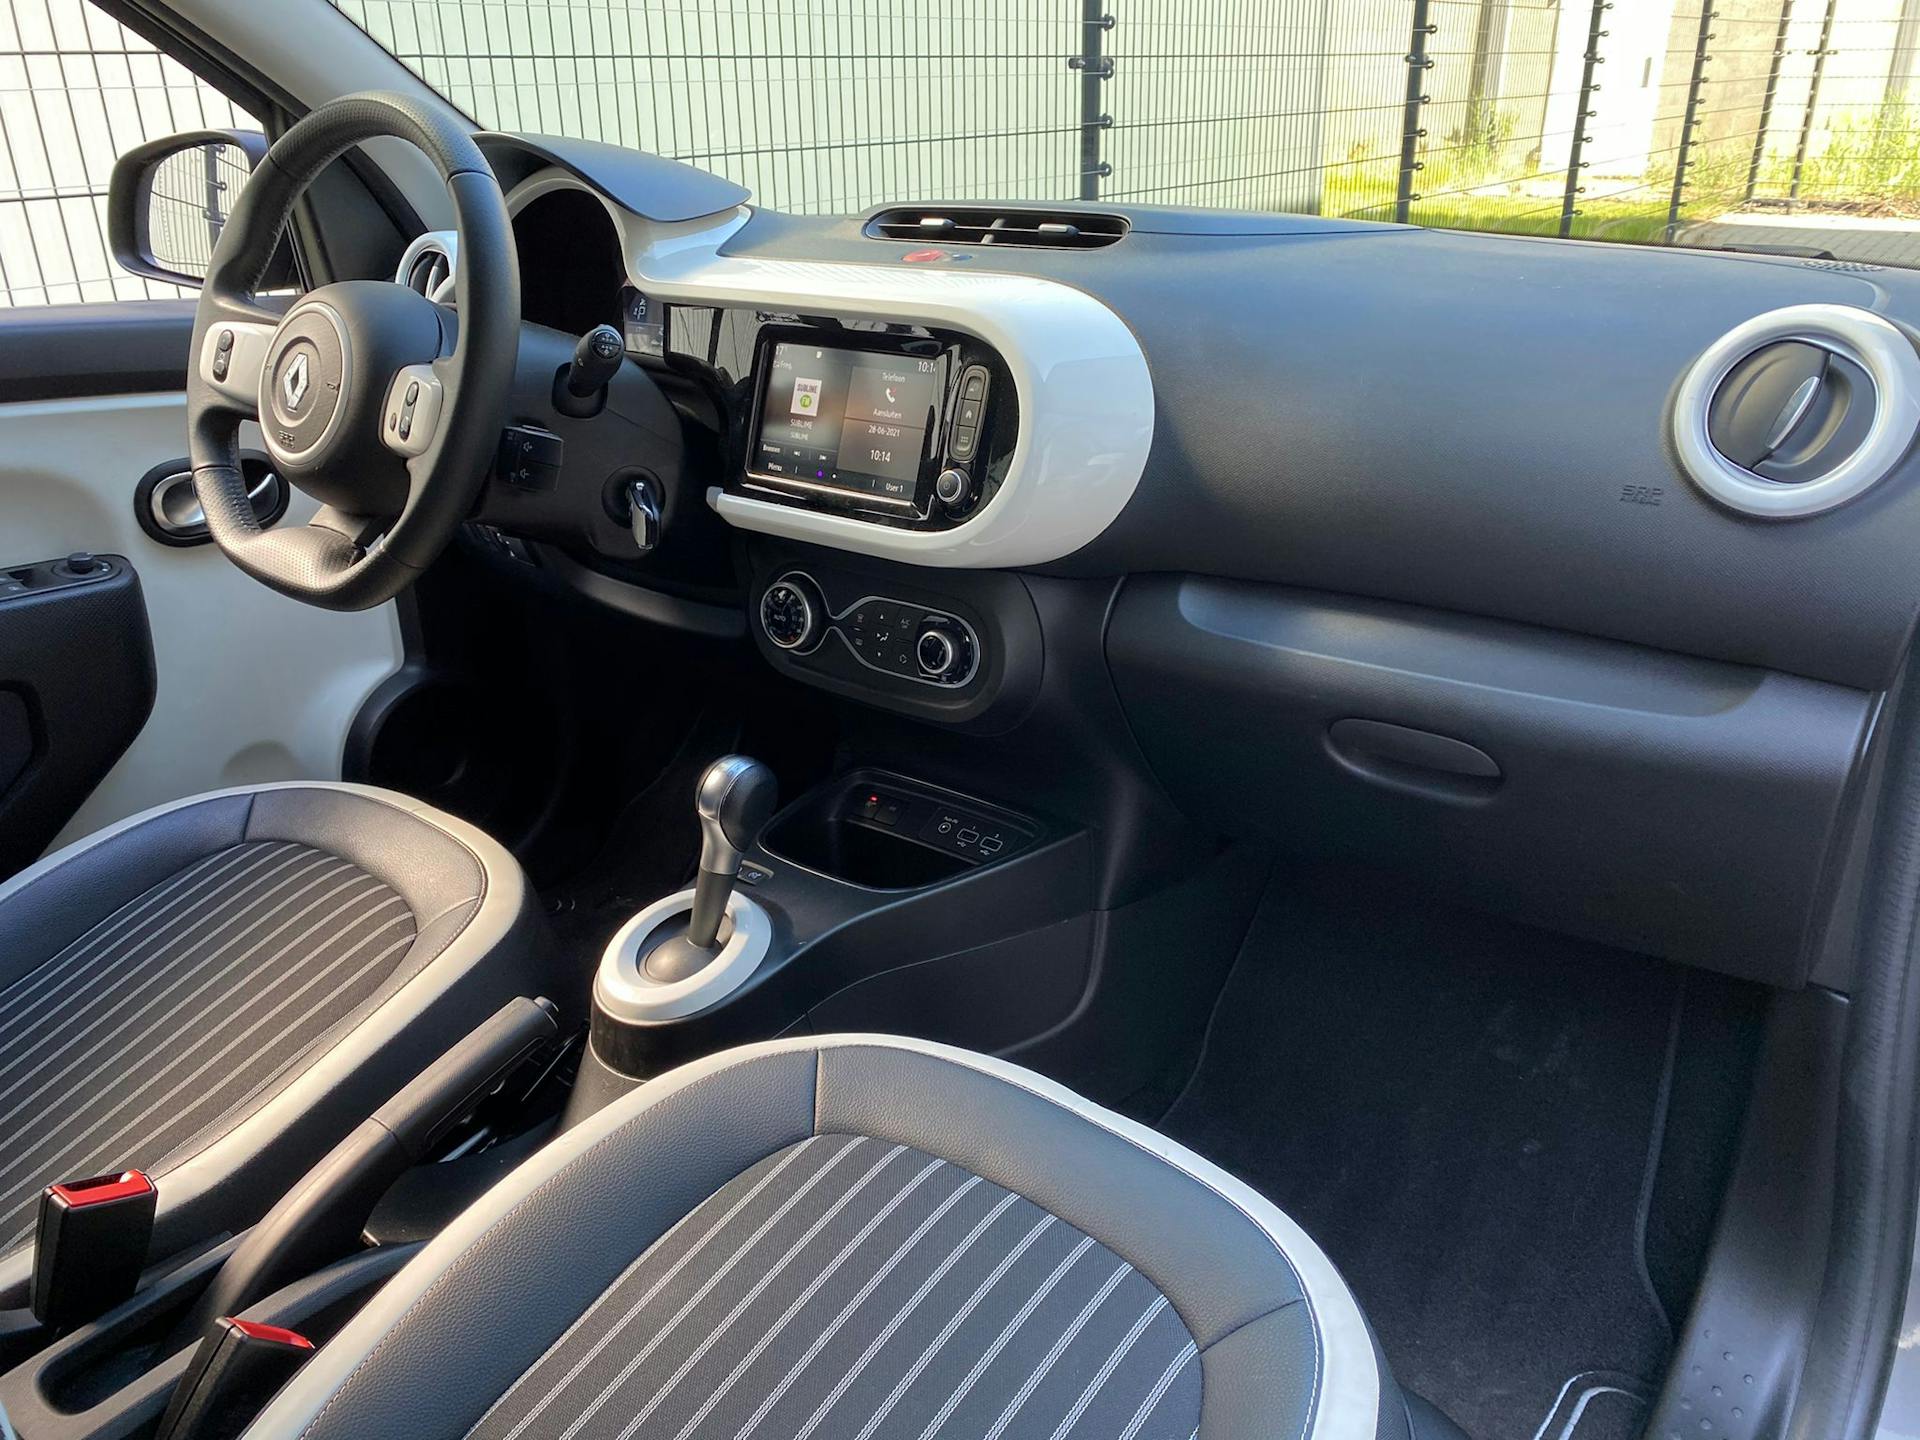 Renault Twingo 0.9 TCe 92 pk Automaat met Lederen bekleding en Camera